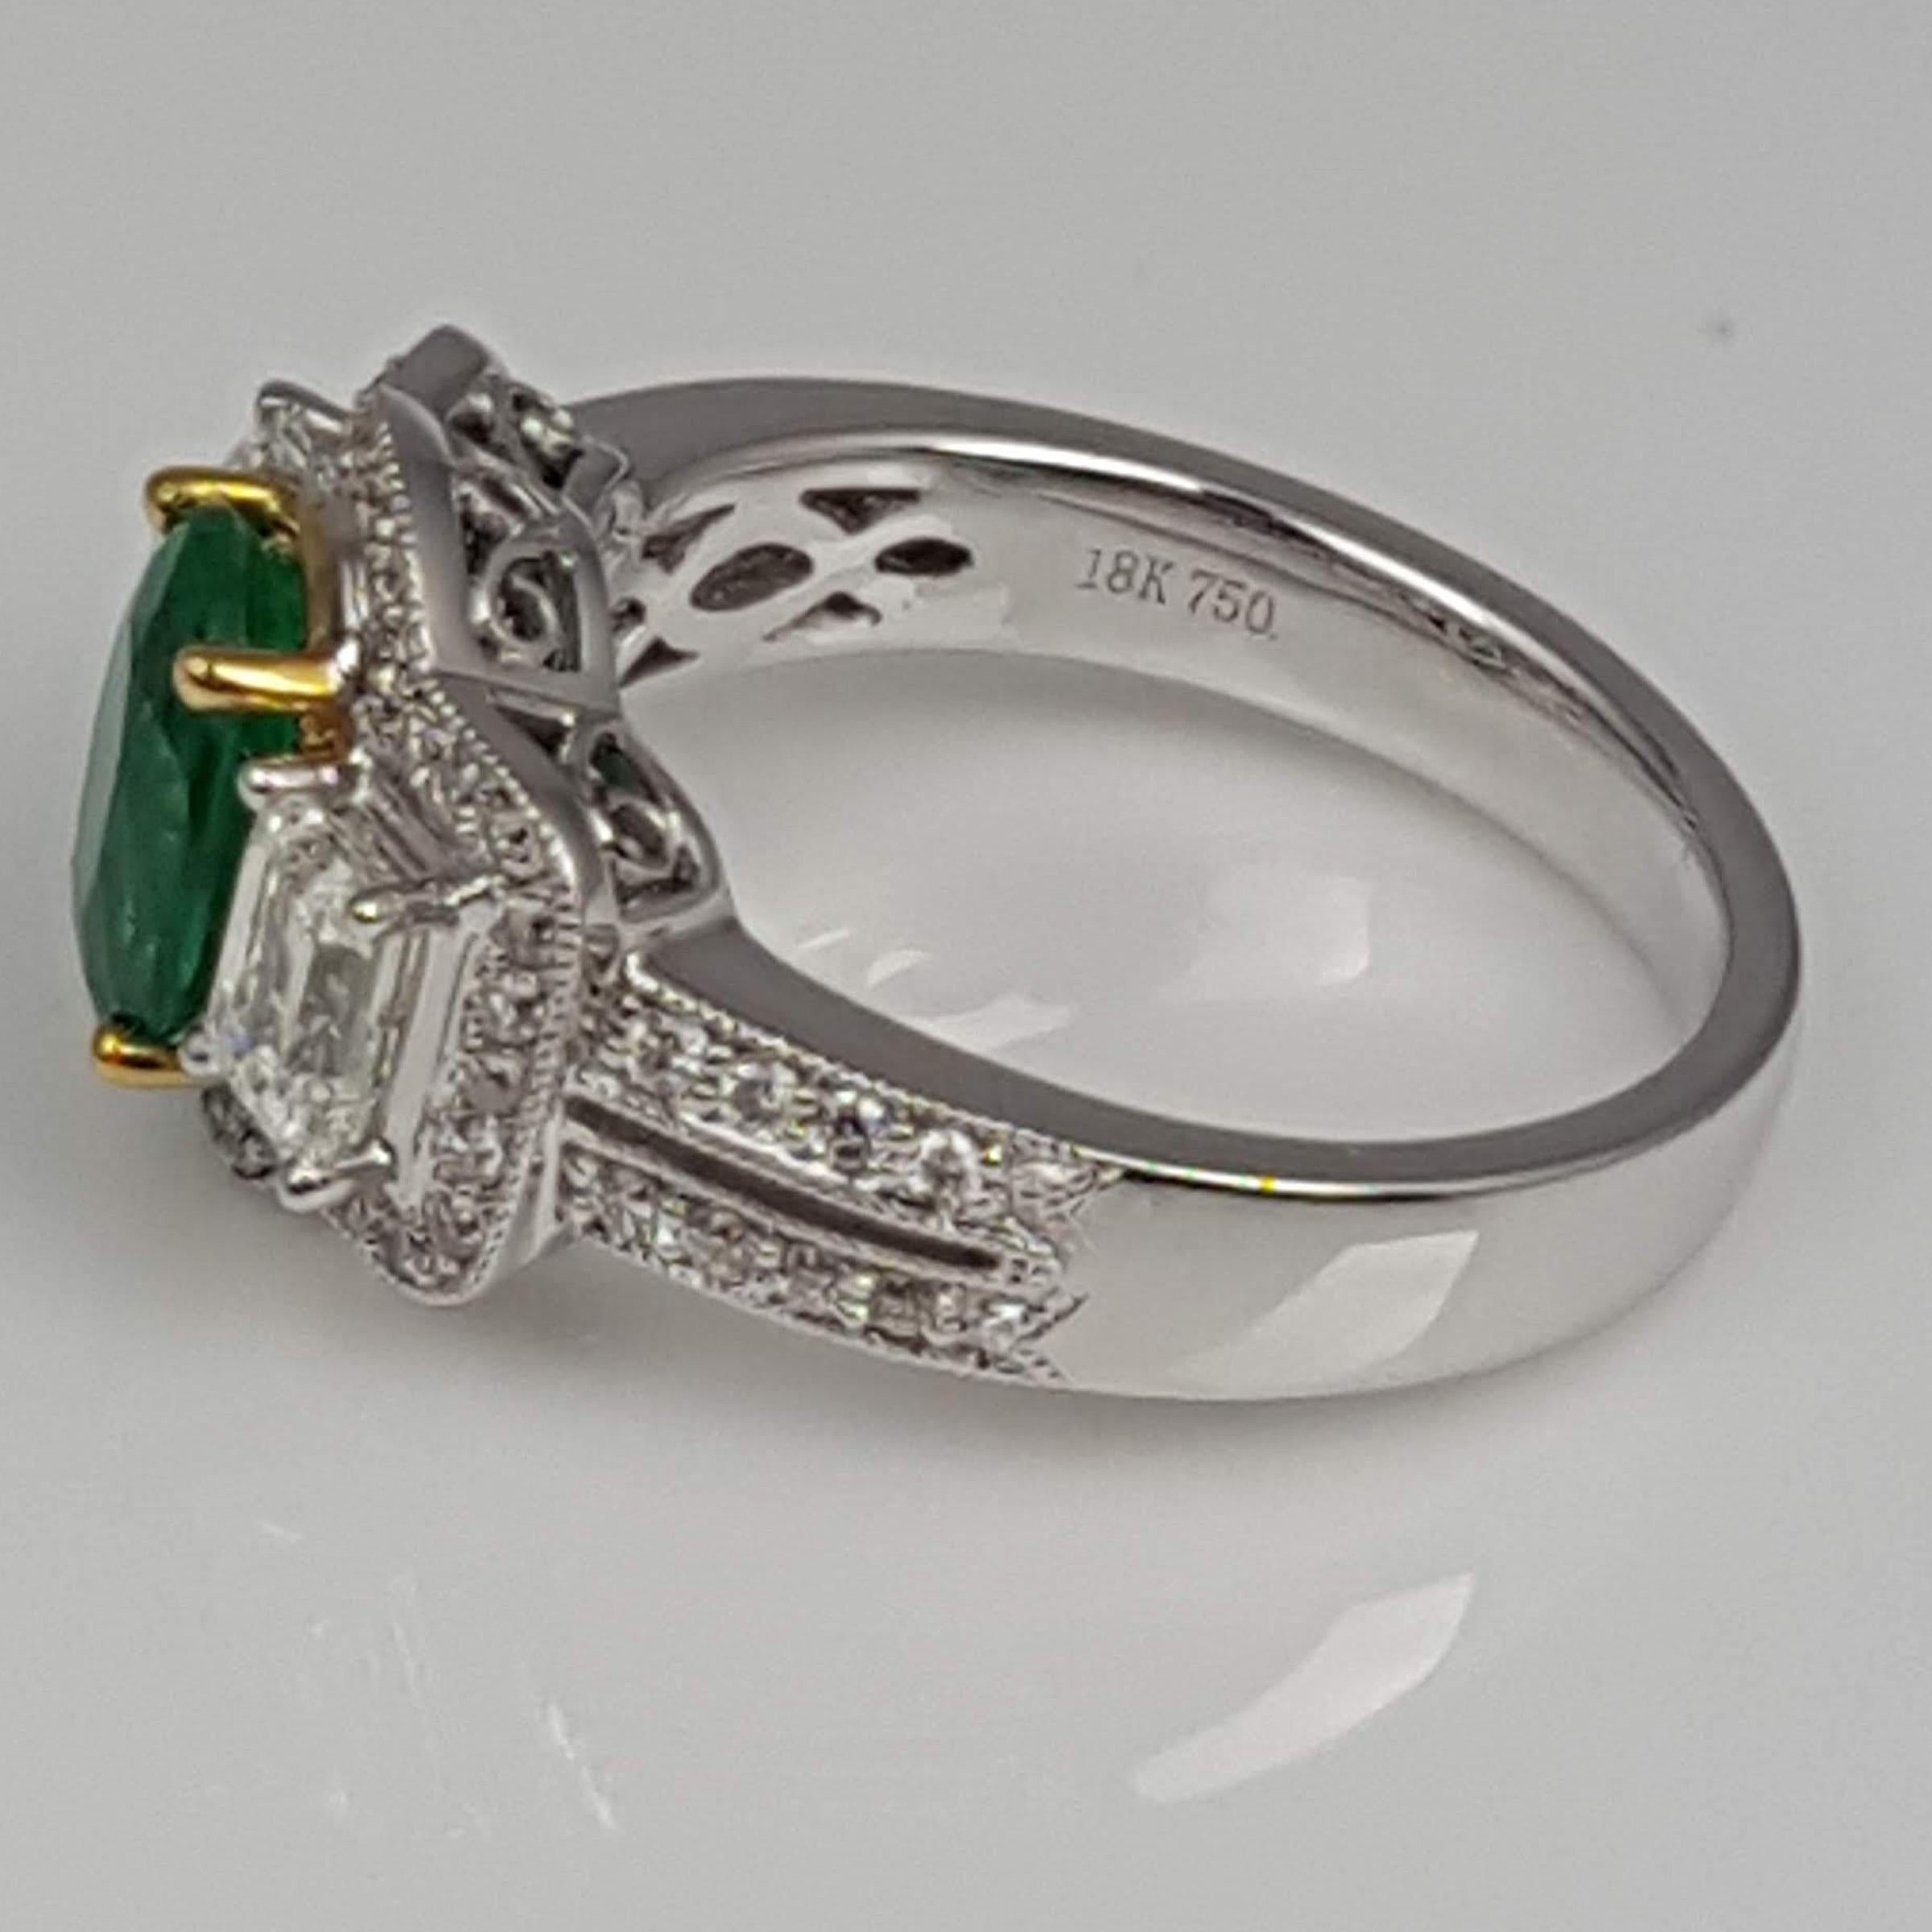 Women's GIA Certified 1.30 Carat Oval Cut Emerald and Diamond Ring in 18 Karat Gold